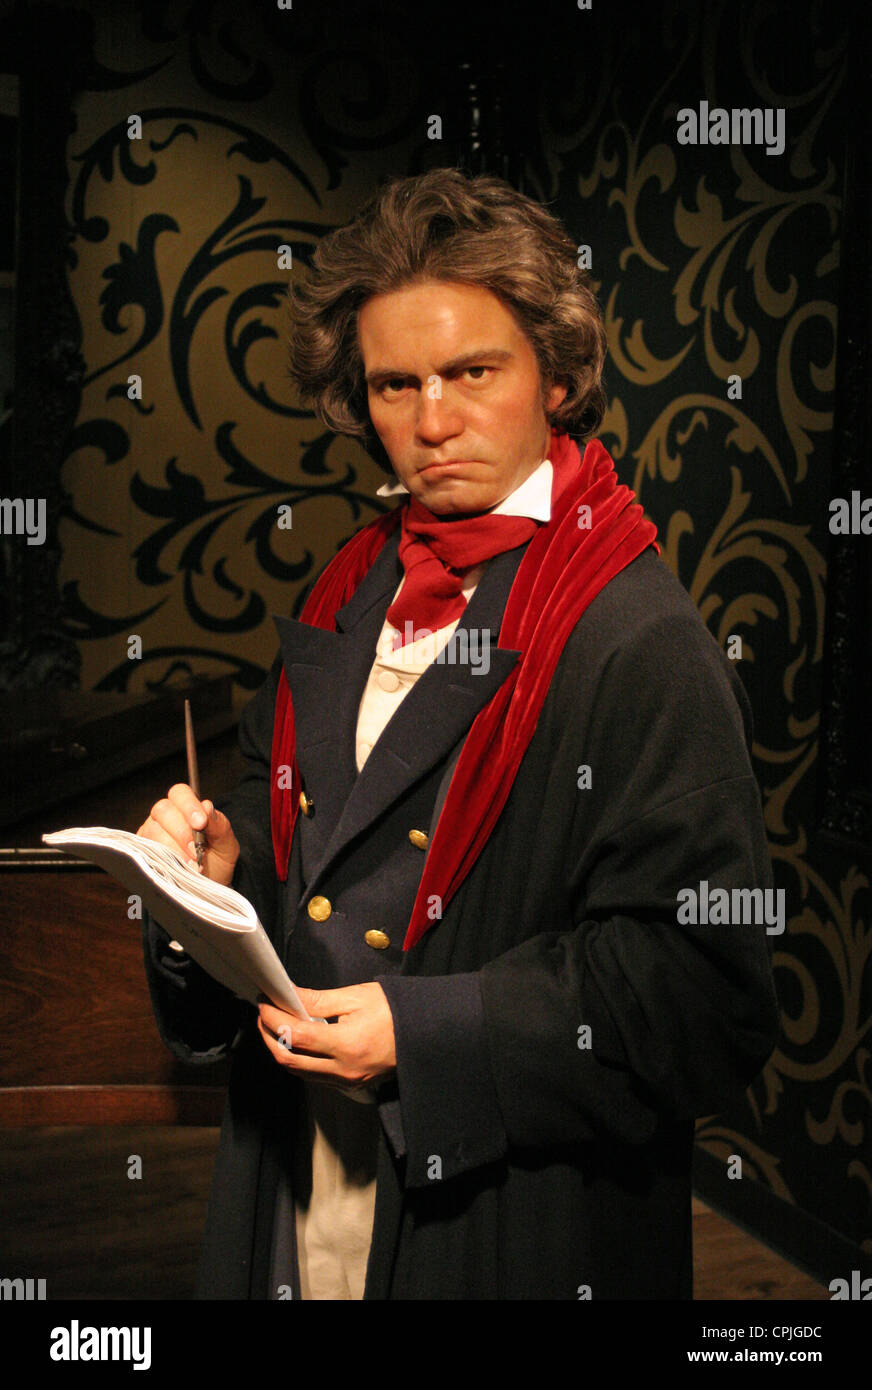 Une figure de cire de Ludwig van Beethoven dans les oeuvres de cire Madame Tussauds, Berlin, Allemagne Banque D'Images